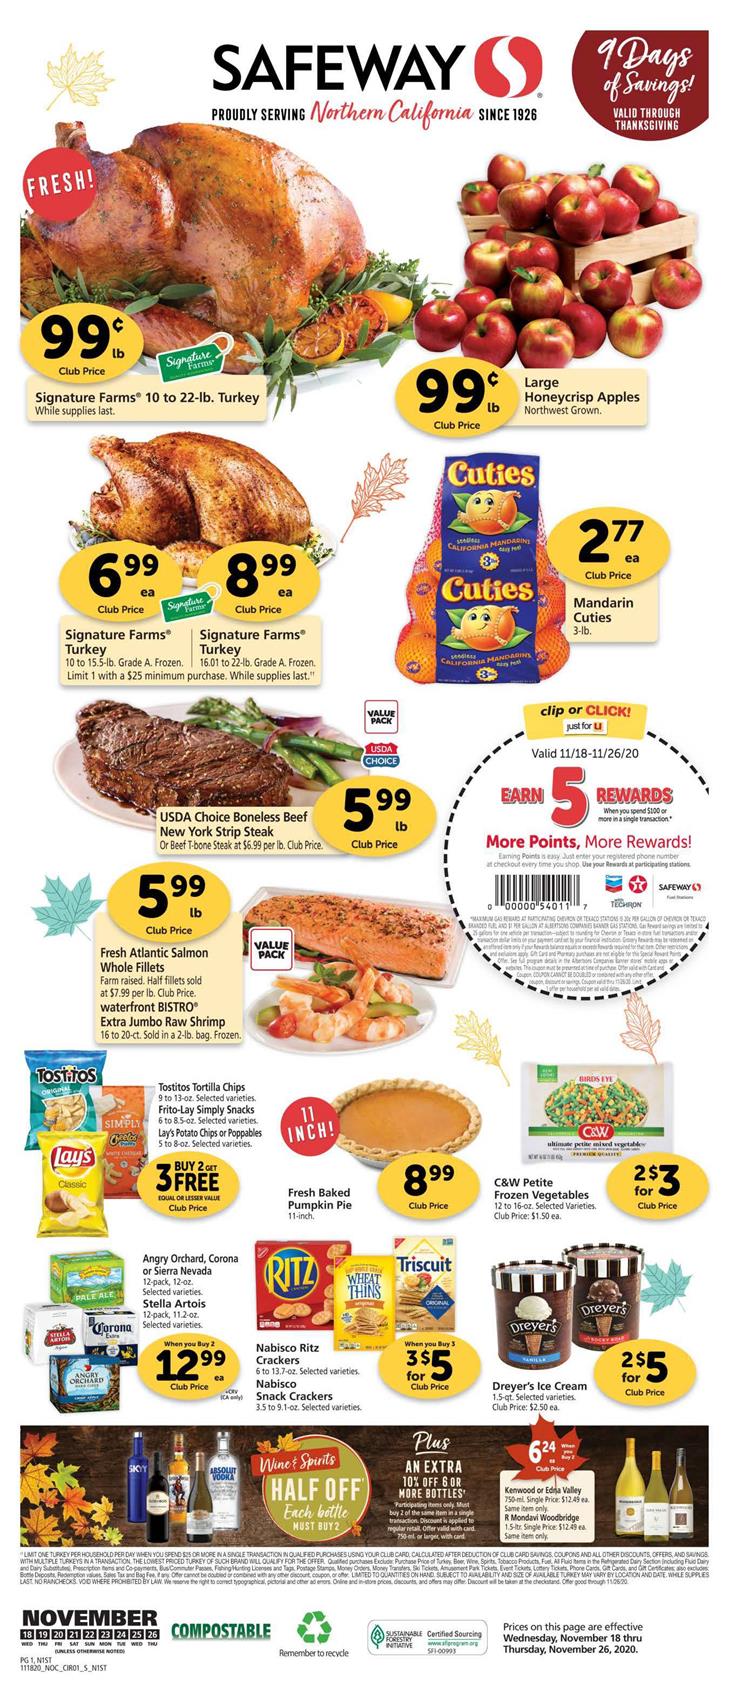 Safeway Weekly Ad Thanksgiving Nov 18 26, 2020 WeeklyAds2